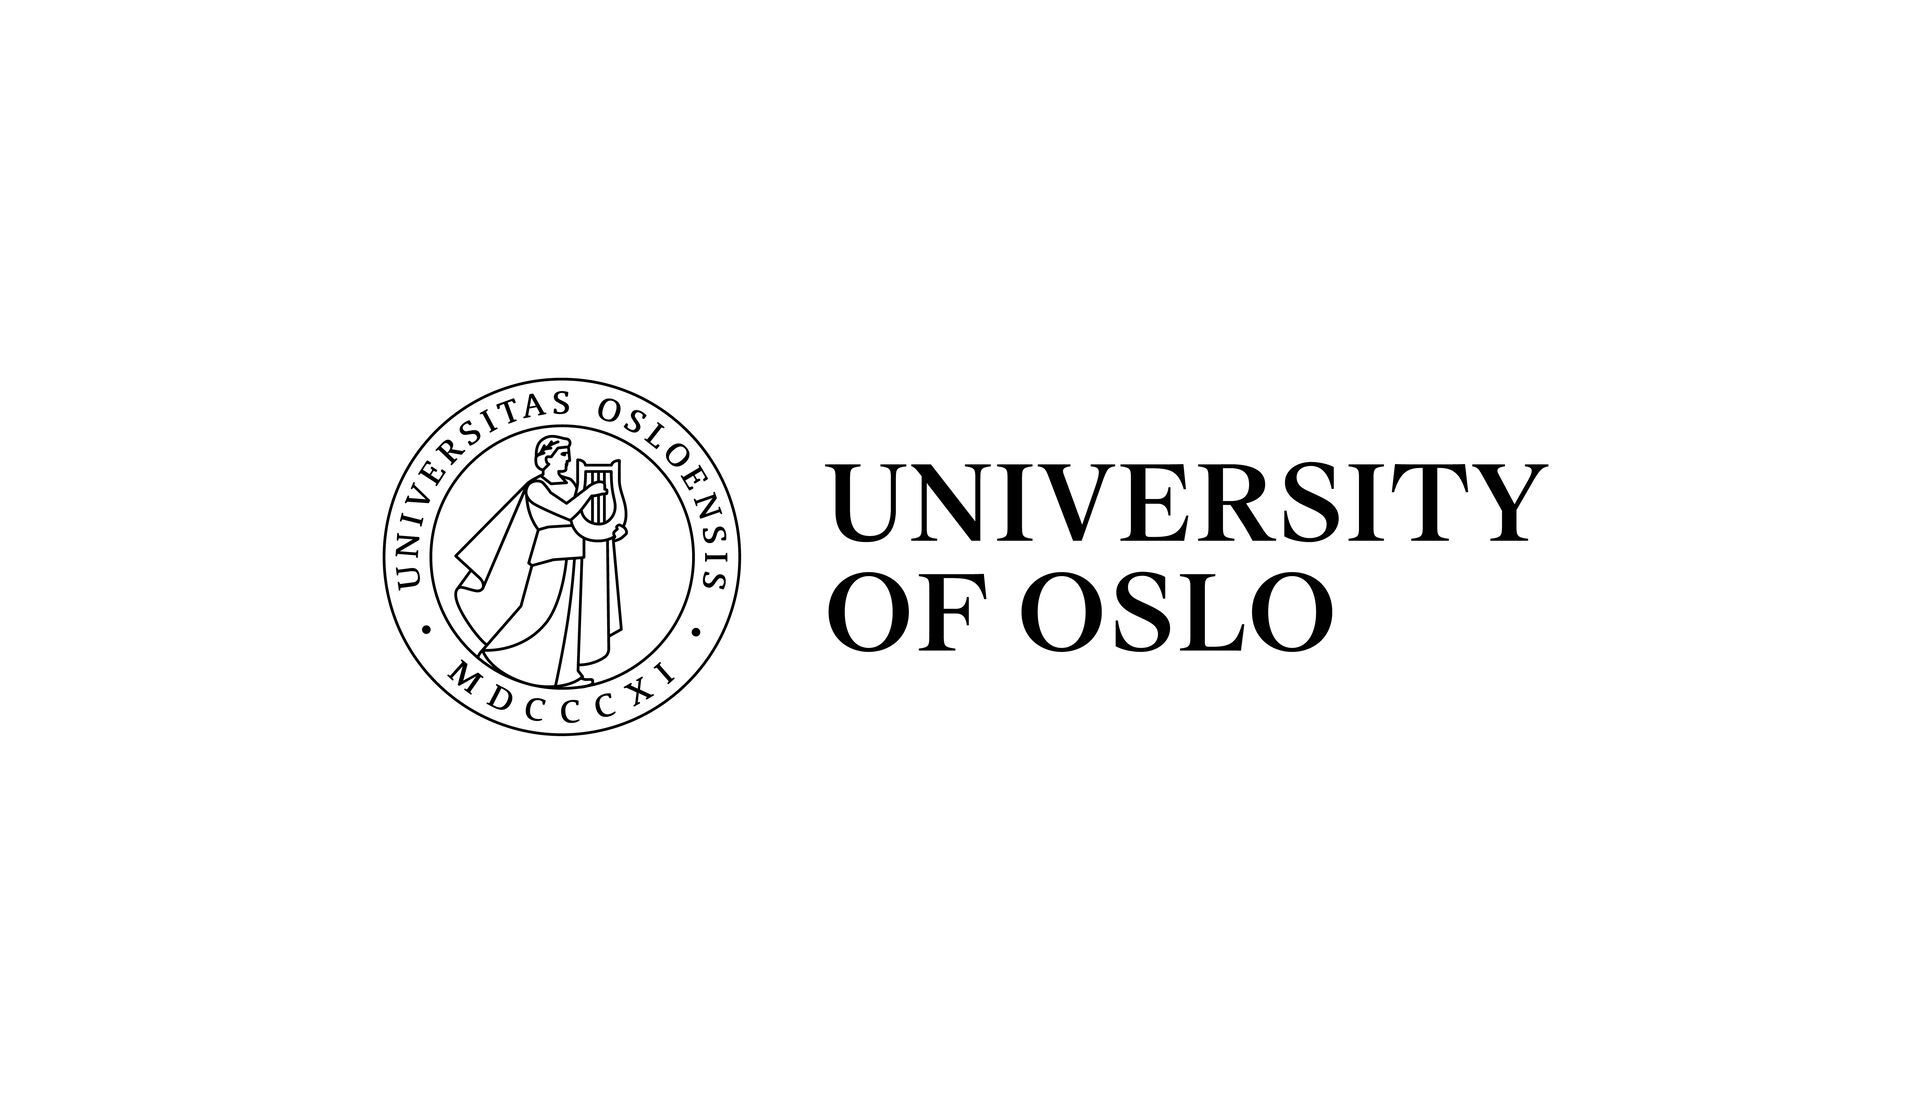 University of oslo logo